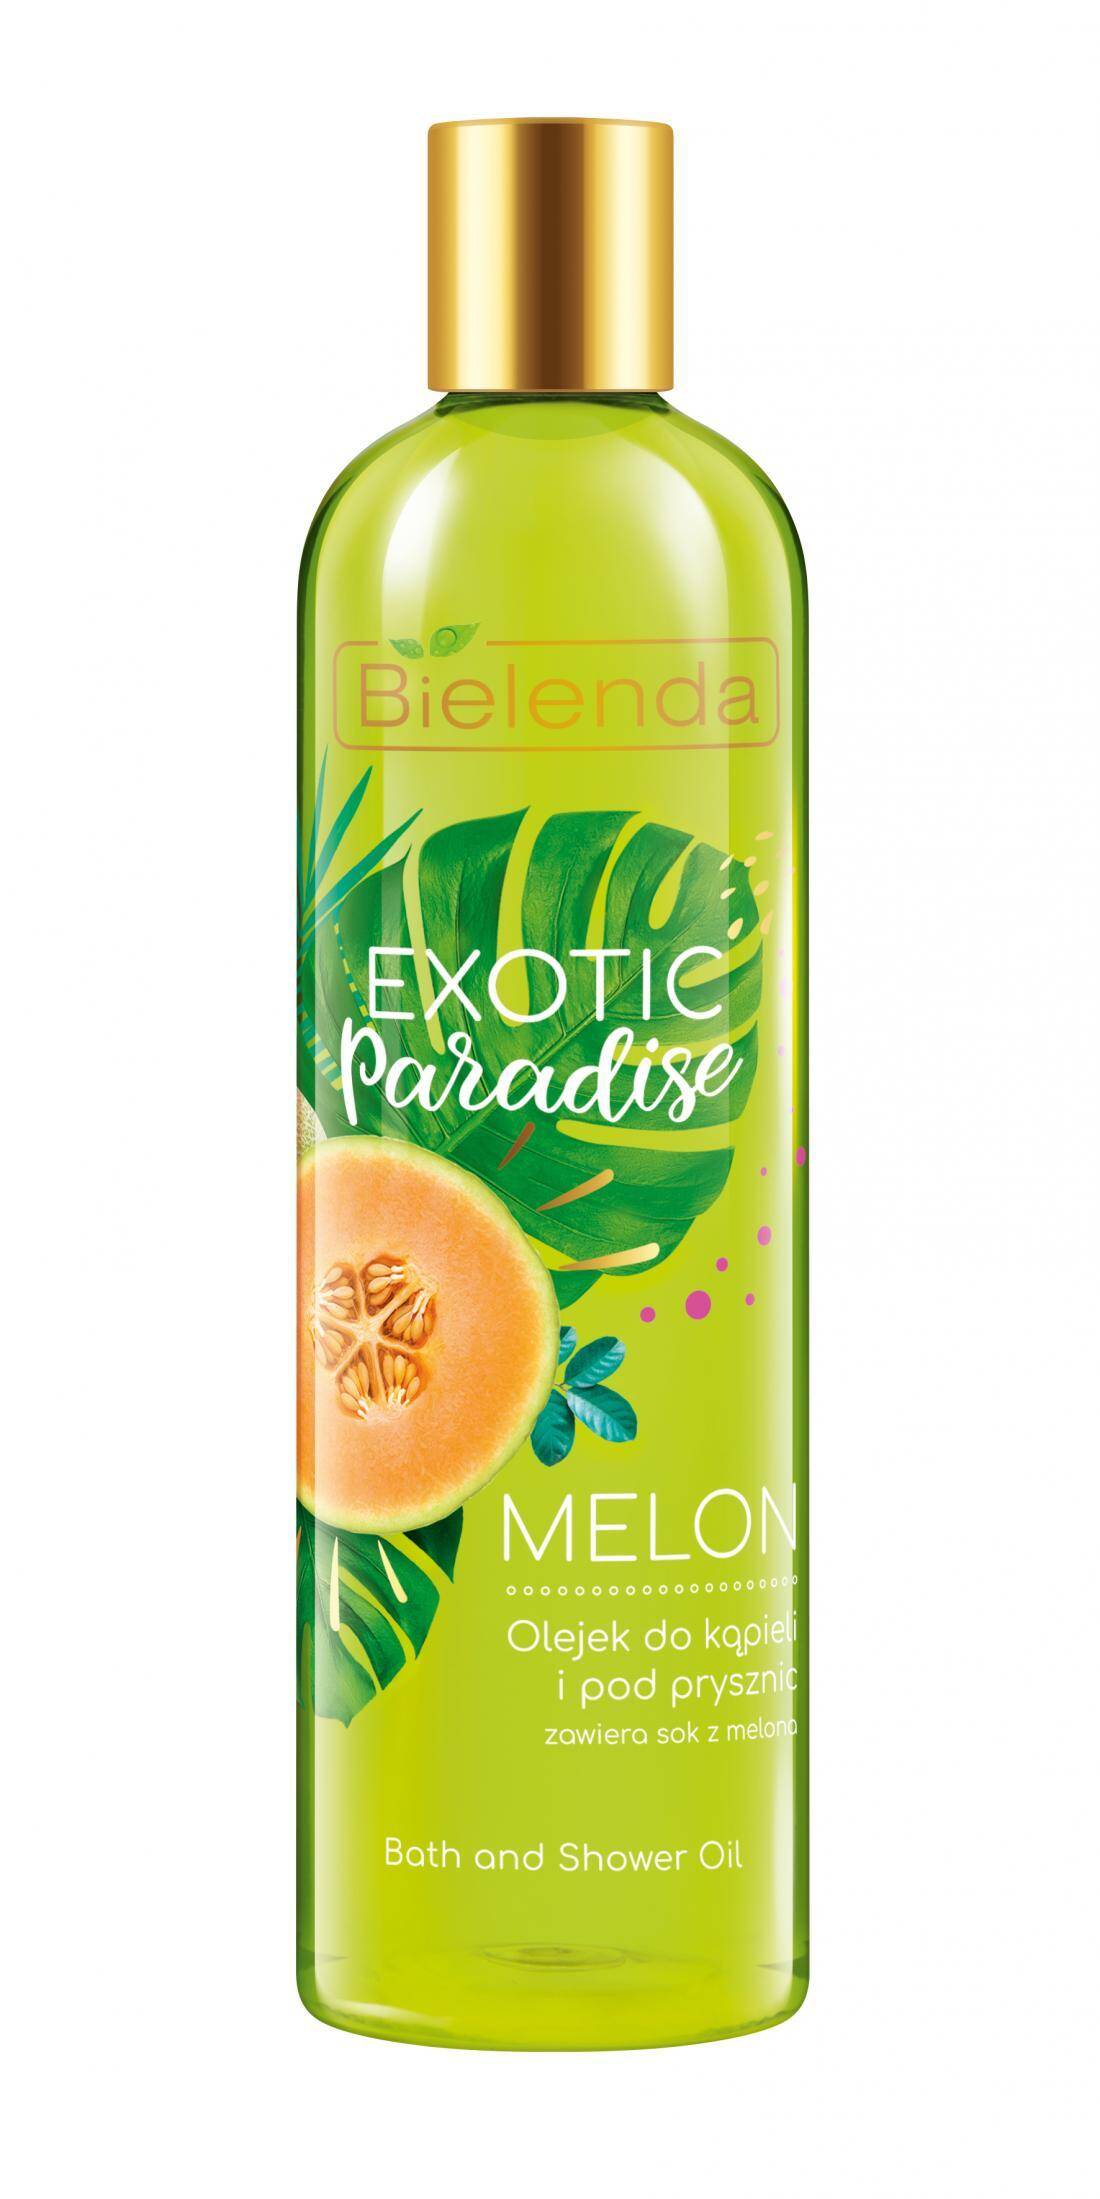 Bielenda Exotic Paradise olejek do kąpieli Melon 400ML